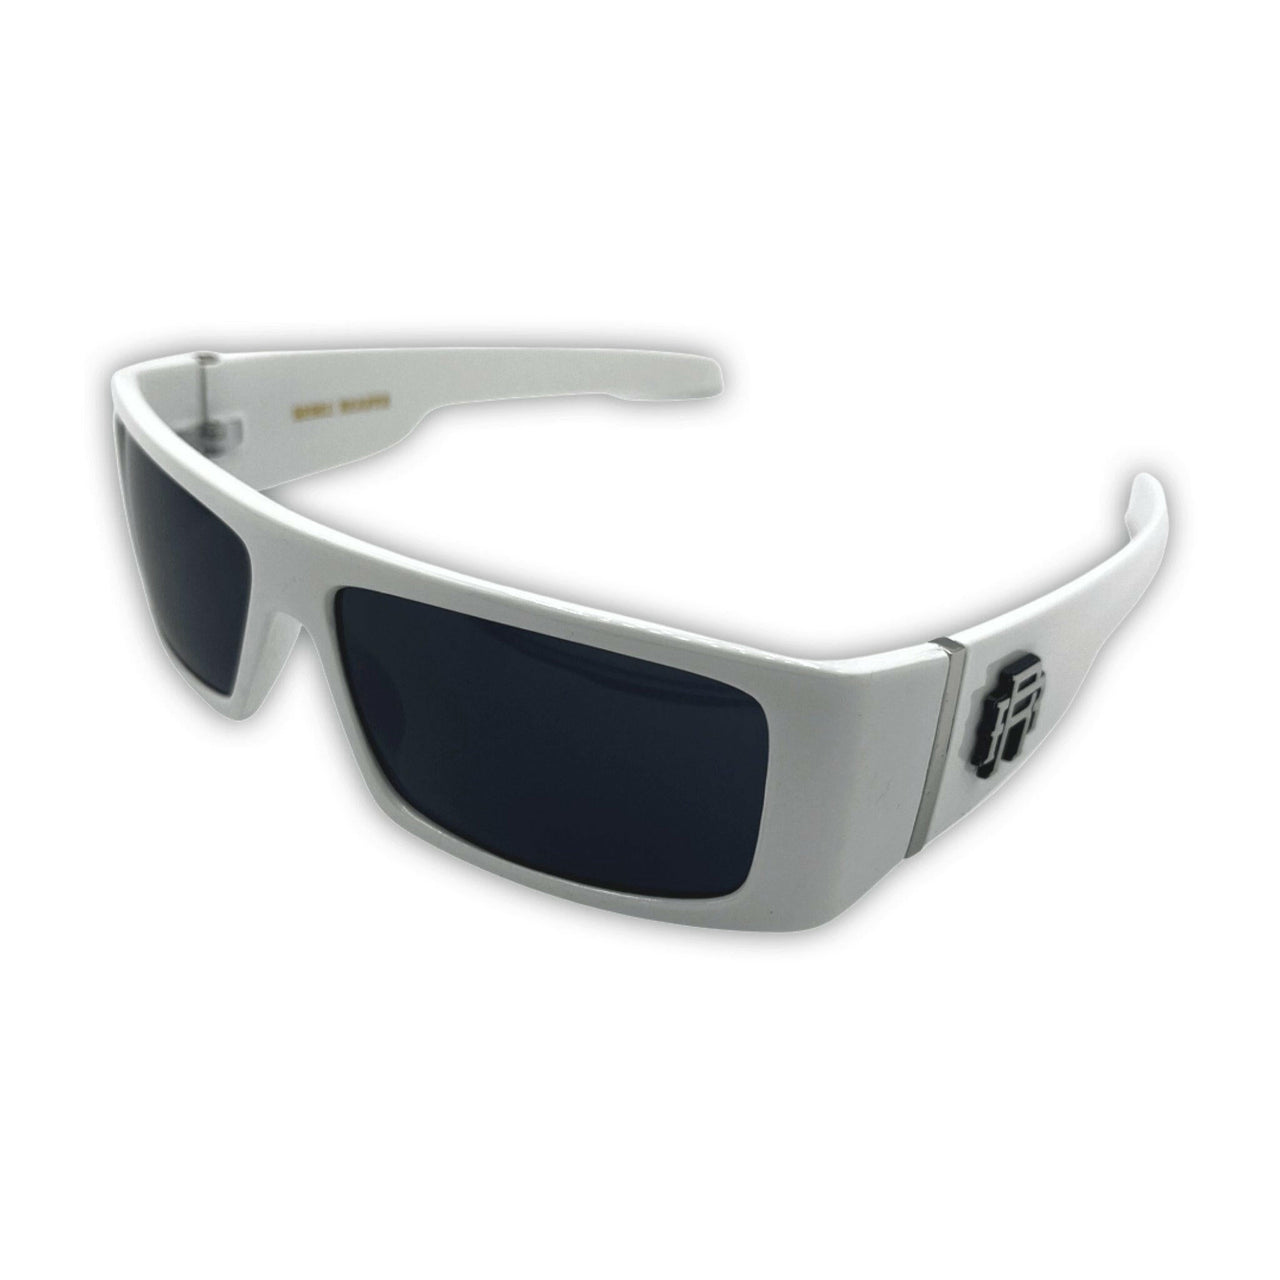 Slick White Sunglasses - Rebel Reaper Clothing Company sunglasses